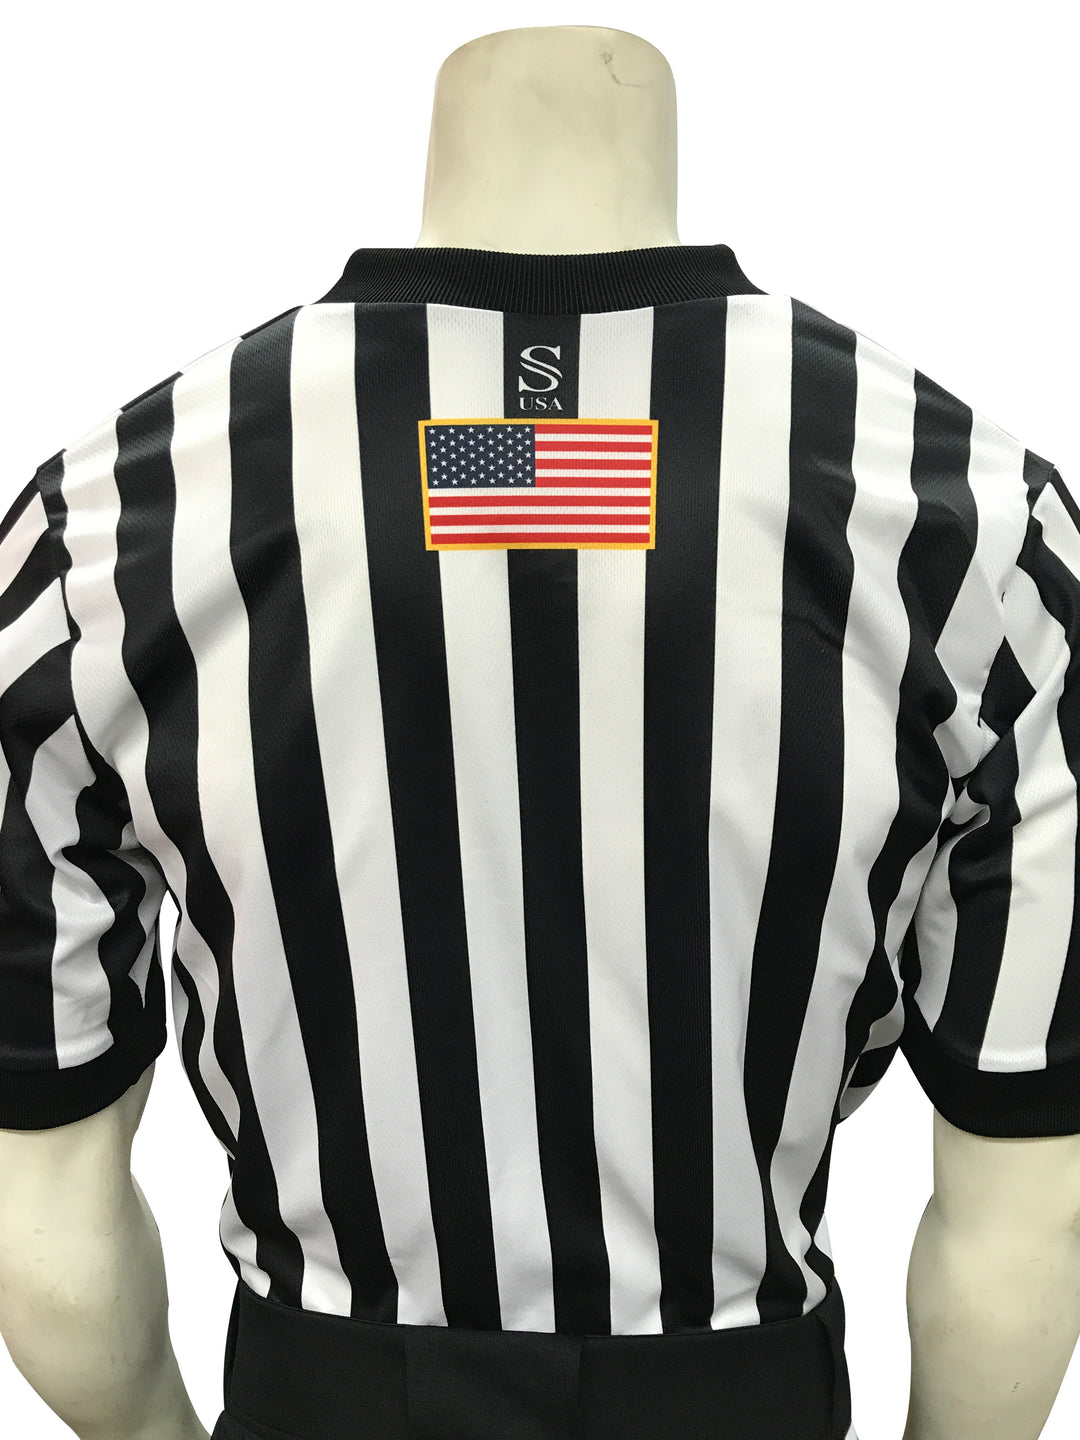 I200MA-GFBK - Smitty "Made in USA" - GFBK IAABO Basketball Men's Short Sleeve Shirt